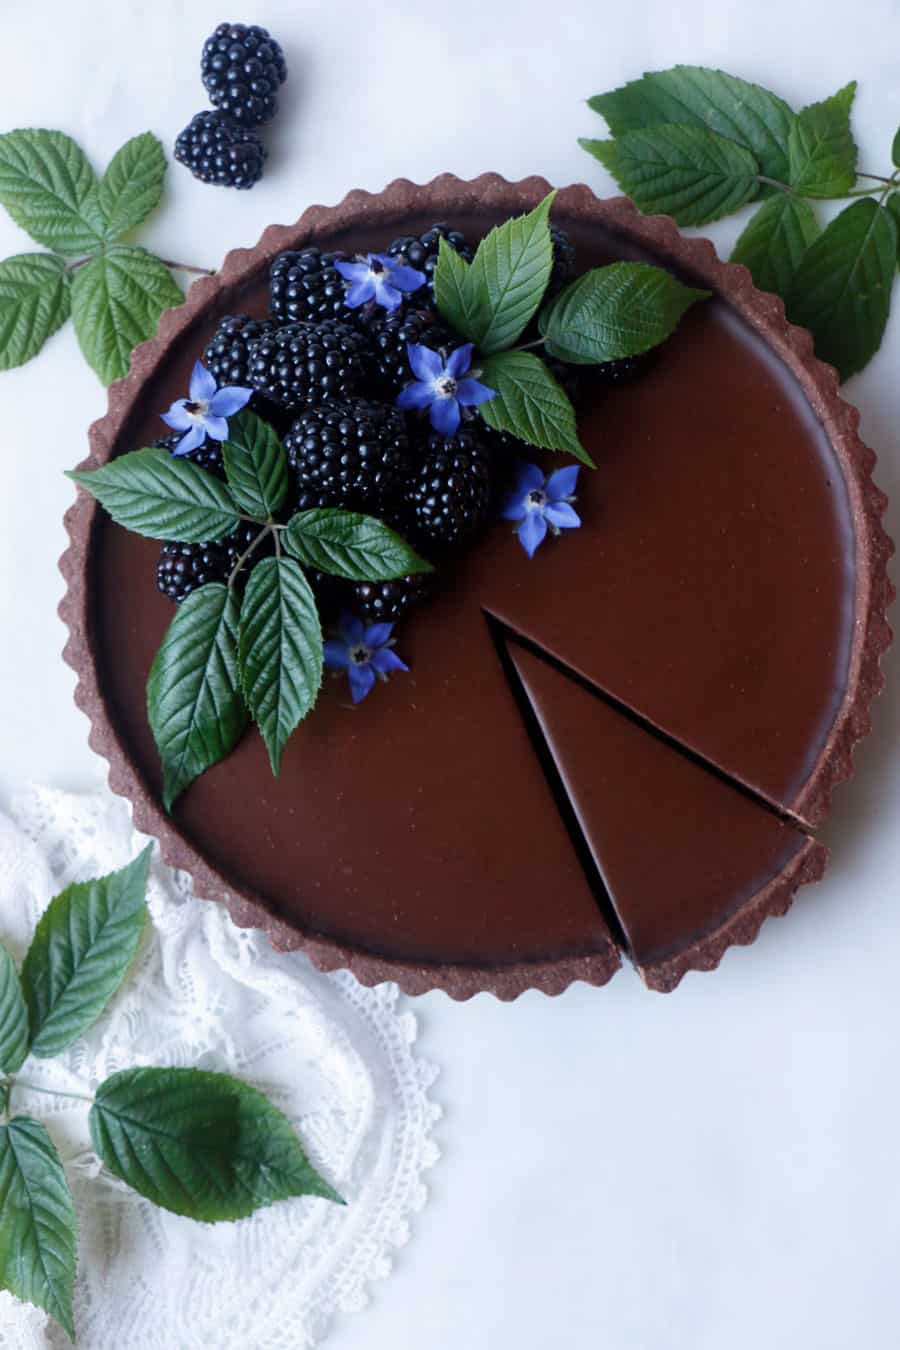 Blackberry Chocolate Cardamom Tart (vegan & gluten-free)